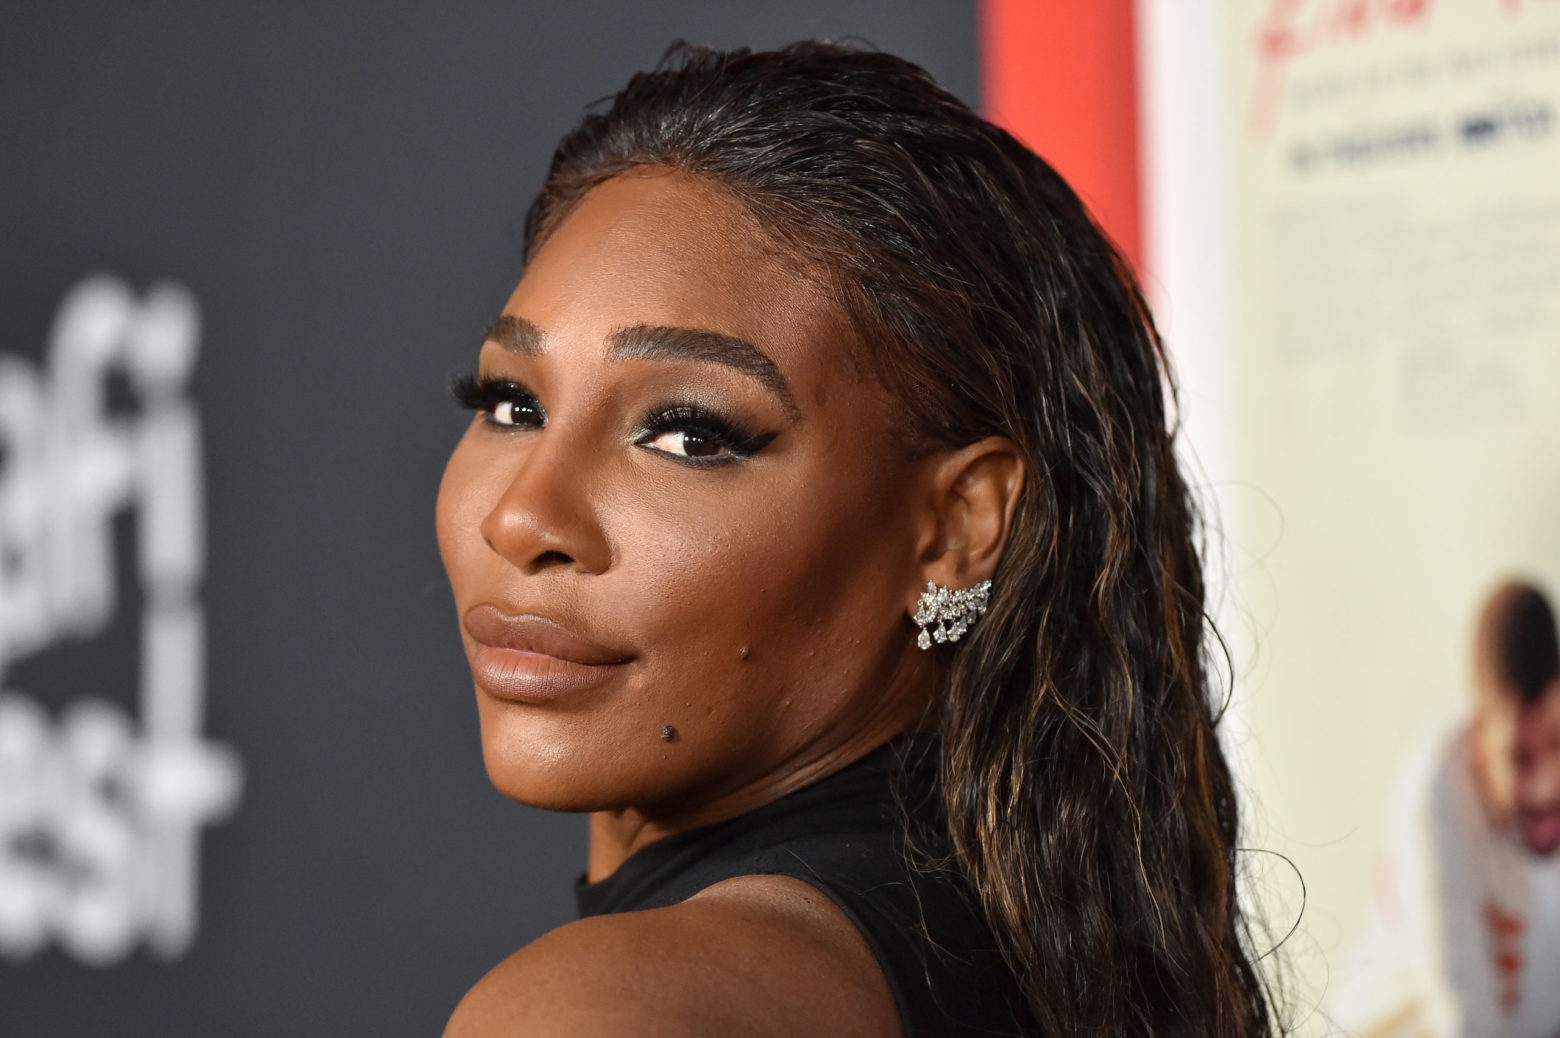 Serena Williams' Clean Beauty Brand Prioritizes Black Athletes